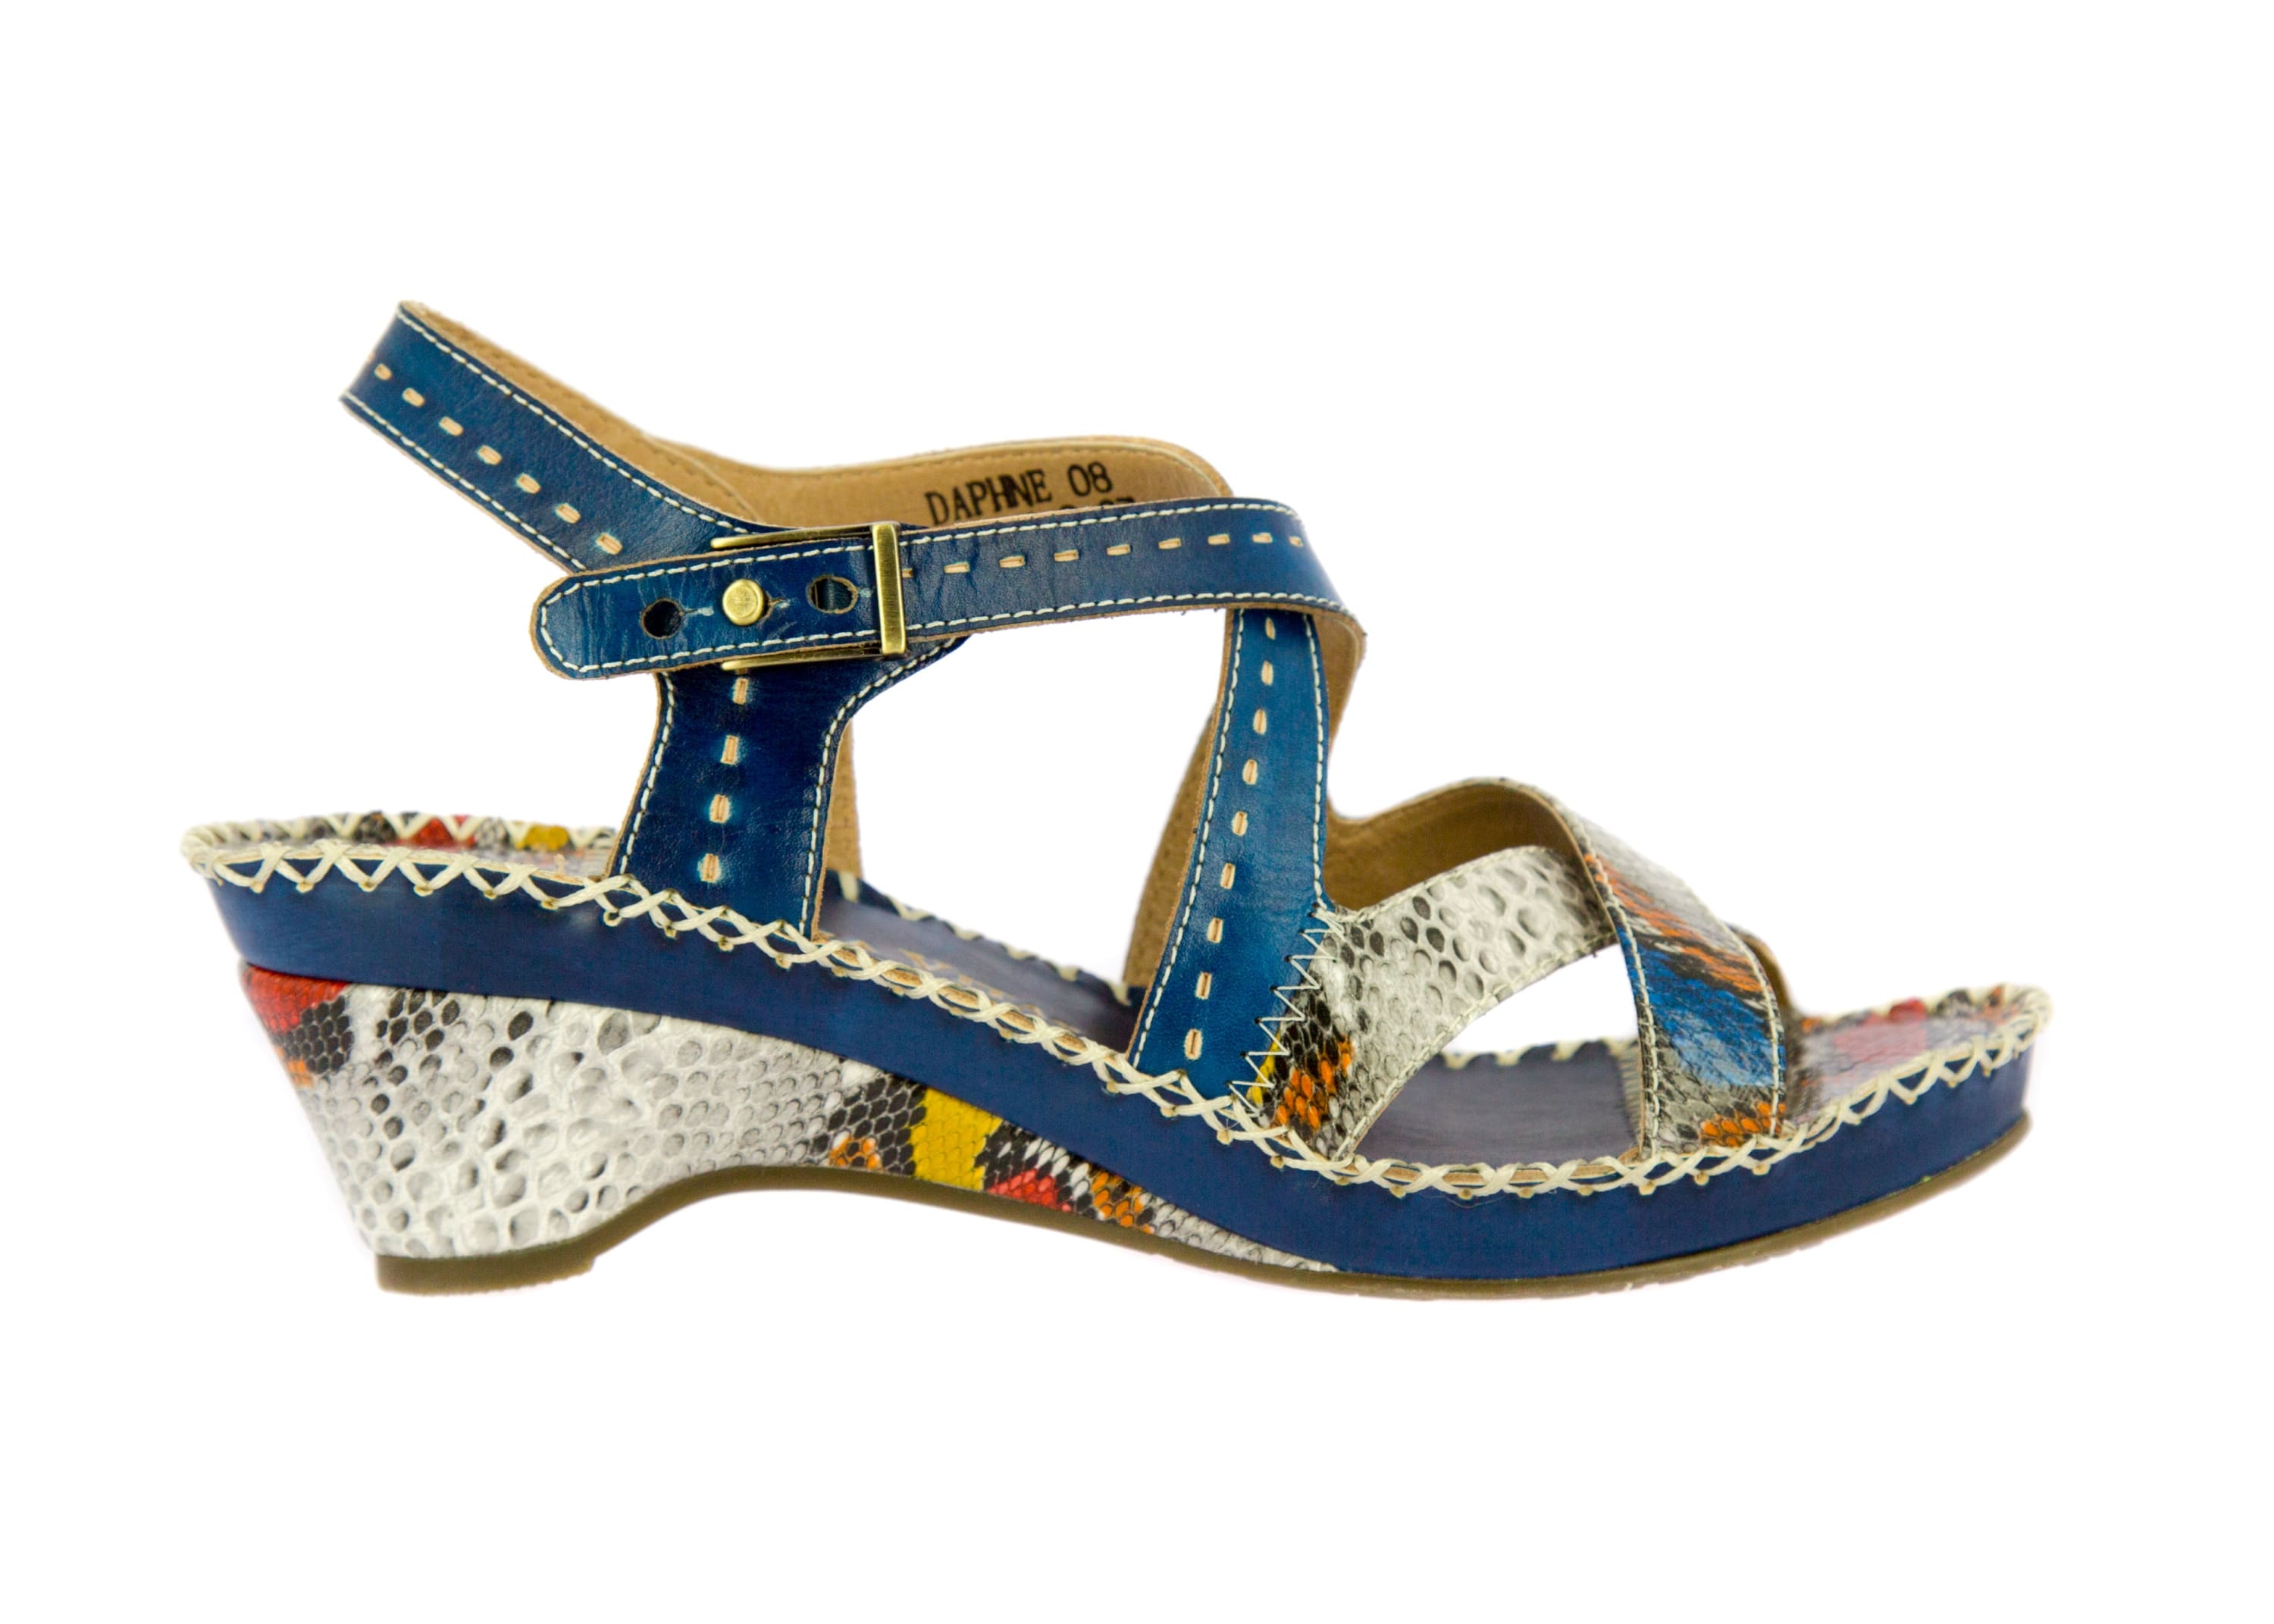 Chaussures DAPHNE 08 - 35 / Bleu - Sandale